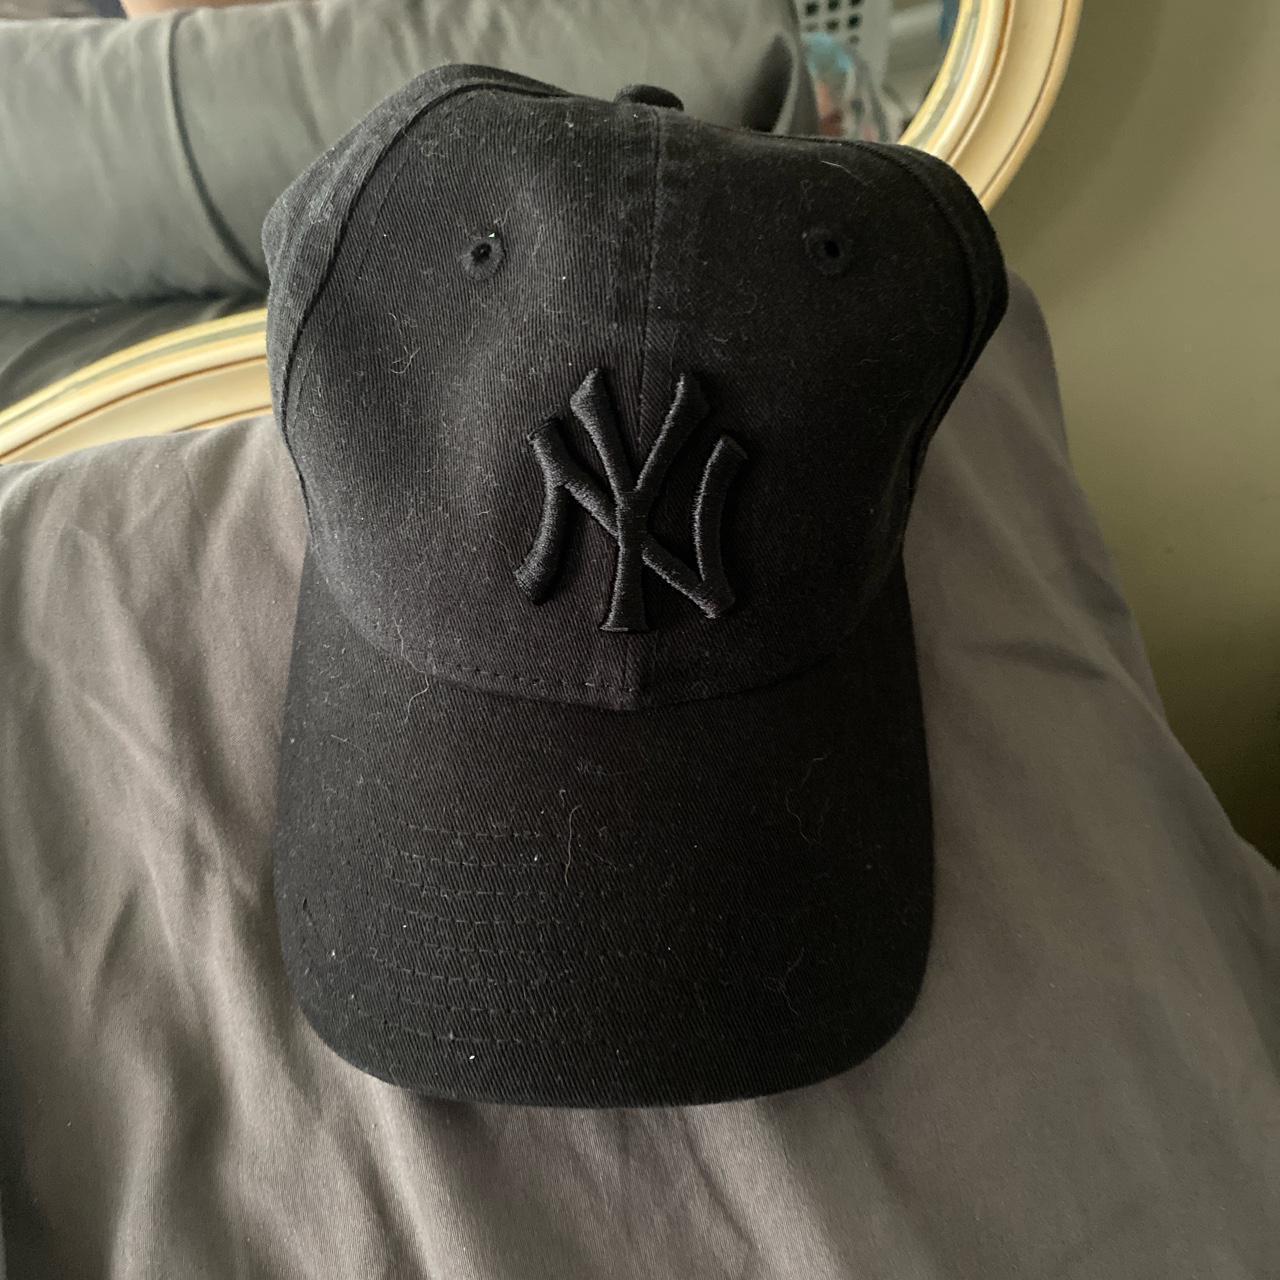 Product Image 1 - Yankees baseball cap